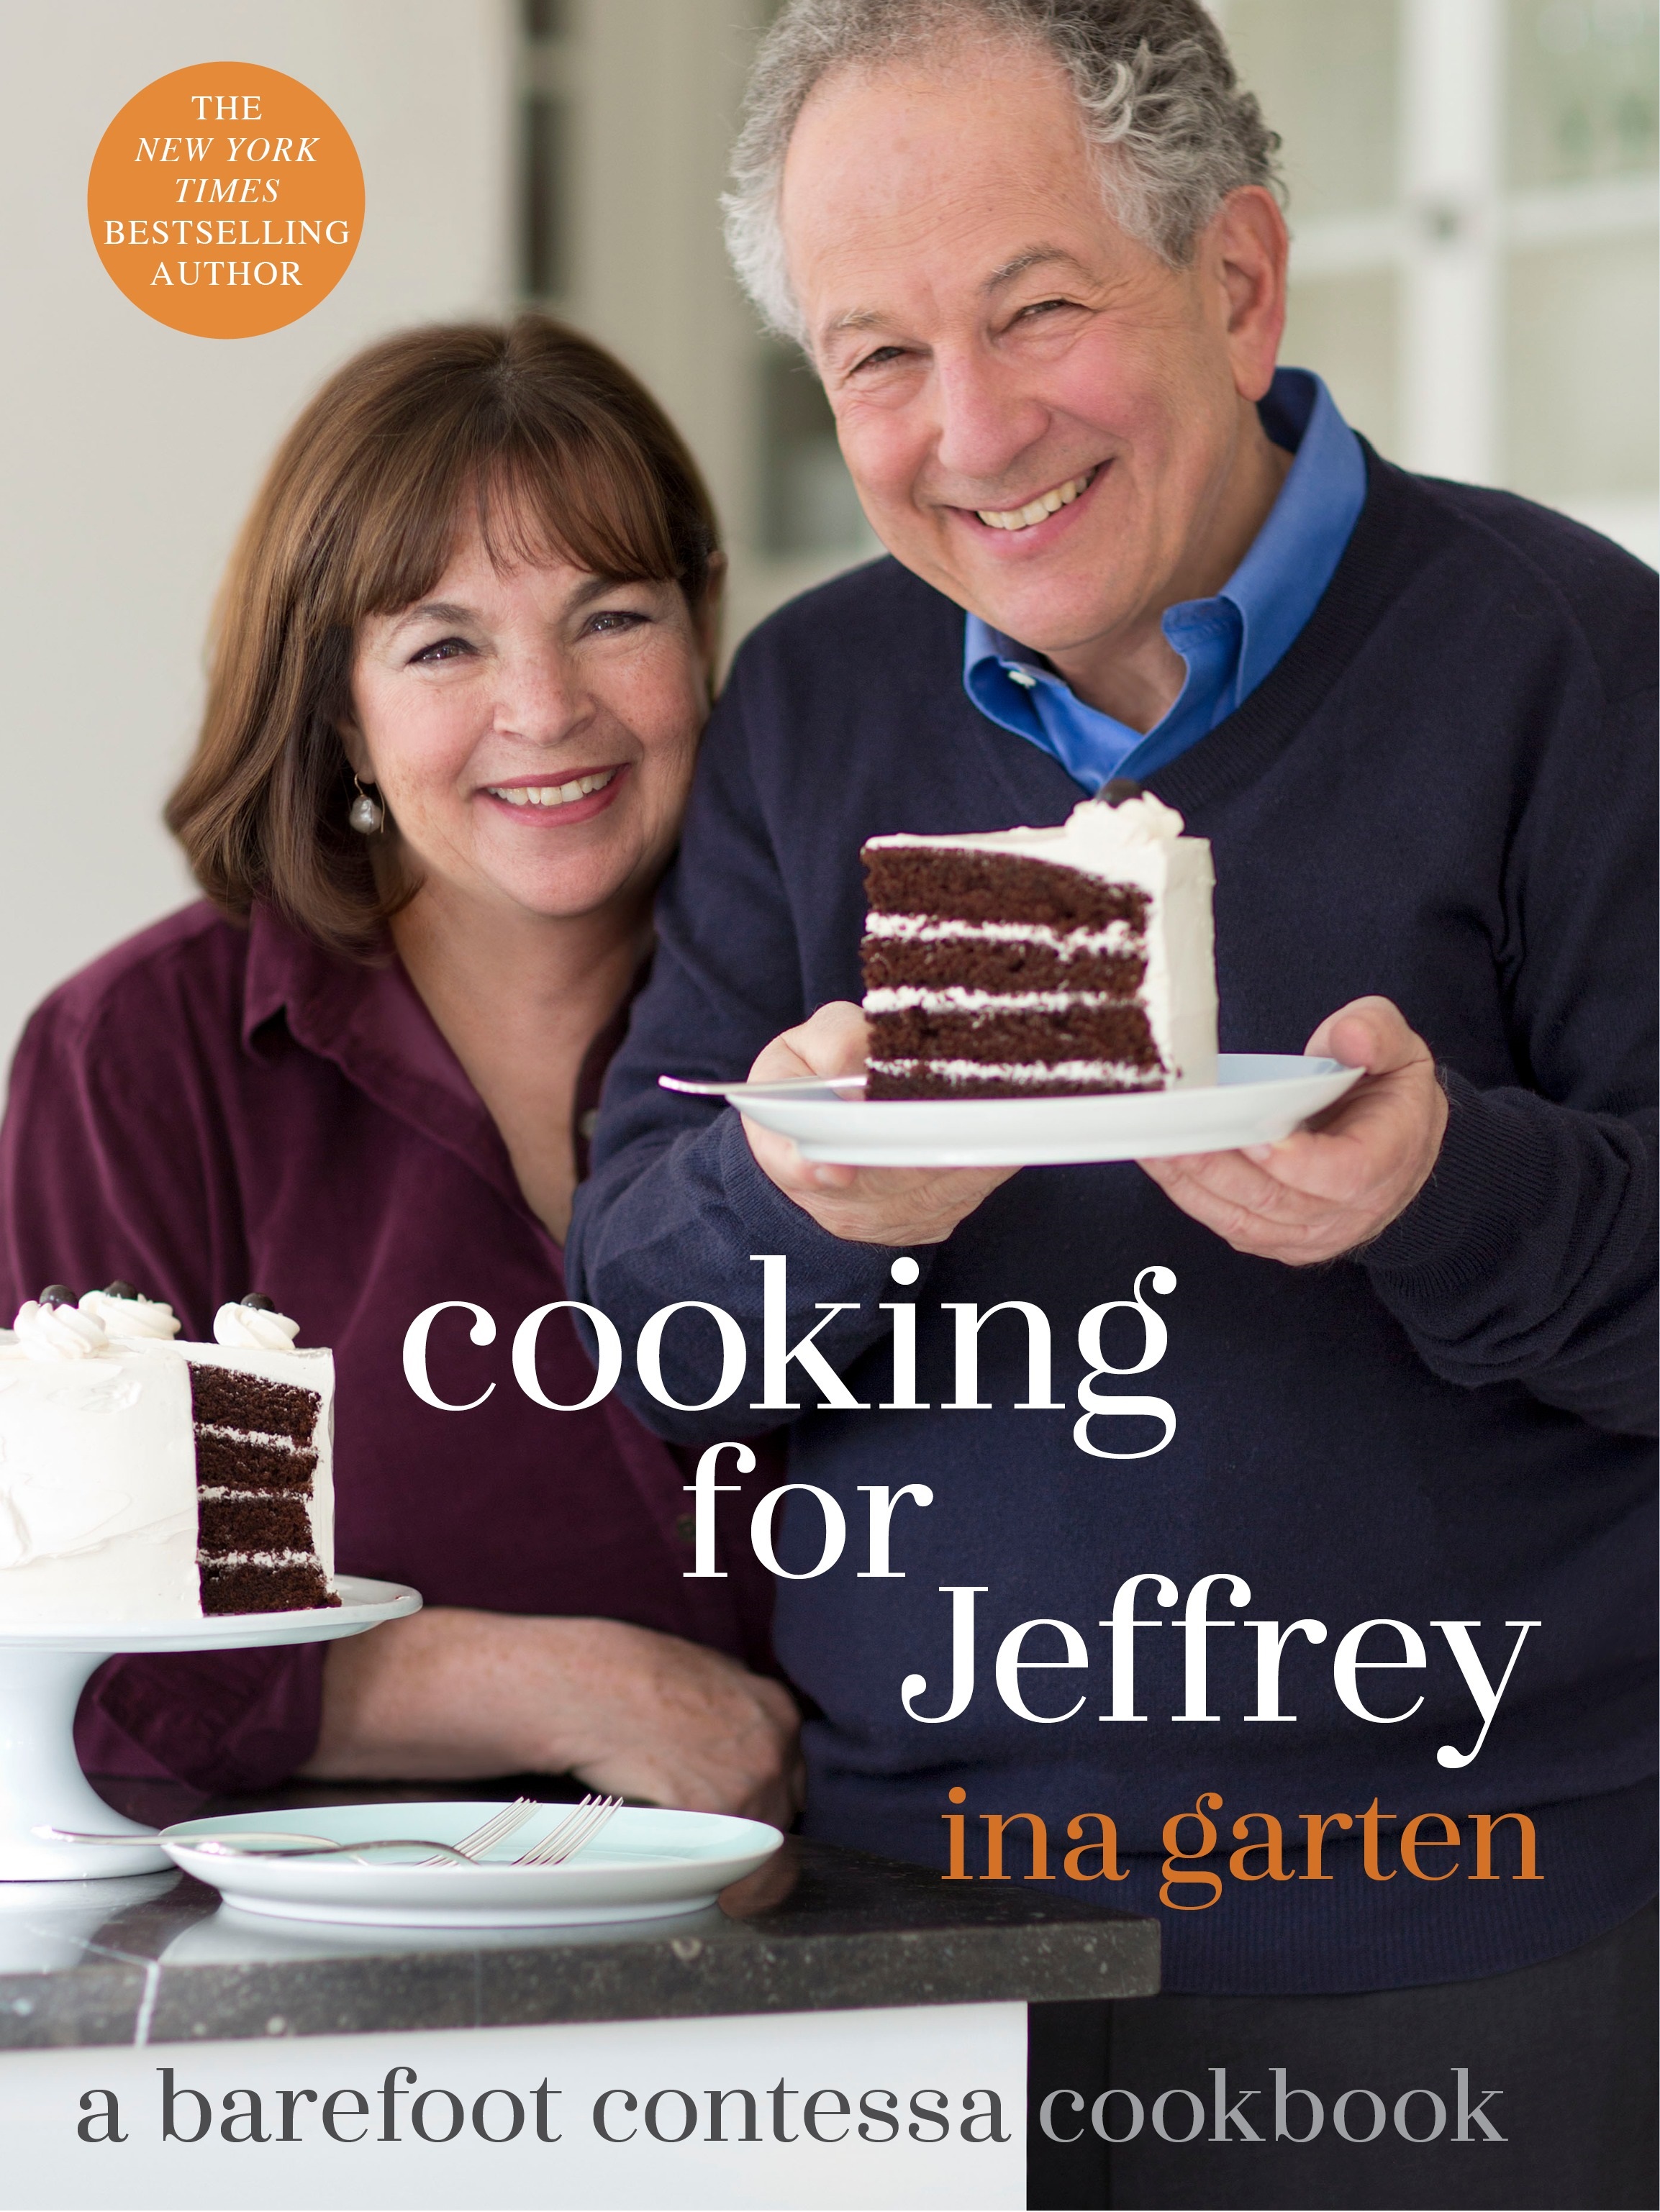 Ina Garten wth husband Jeffrey holding cake.